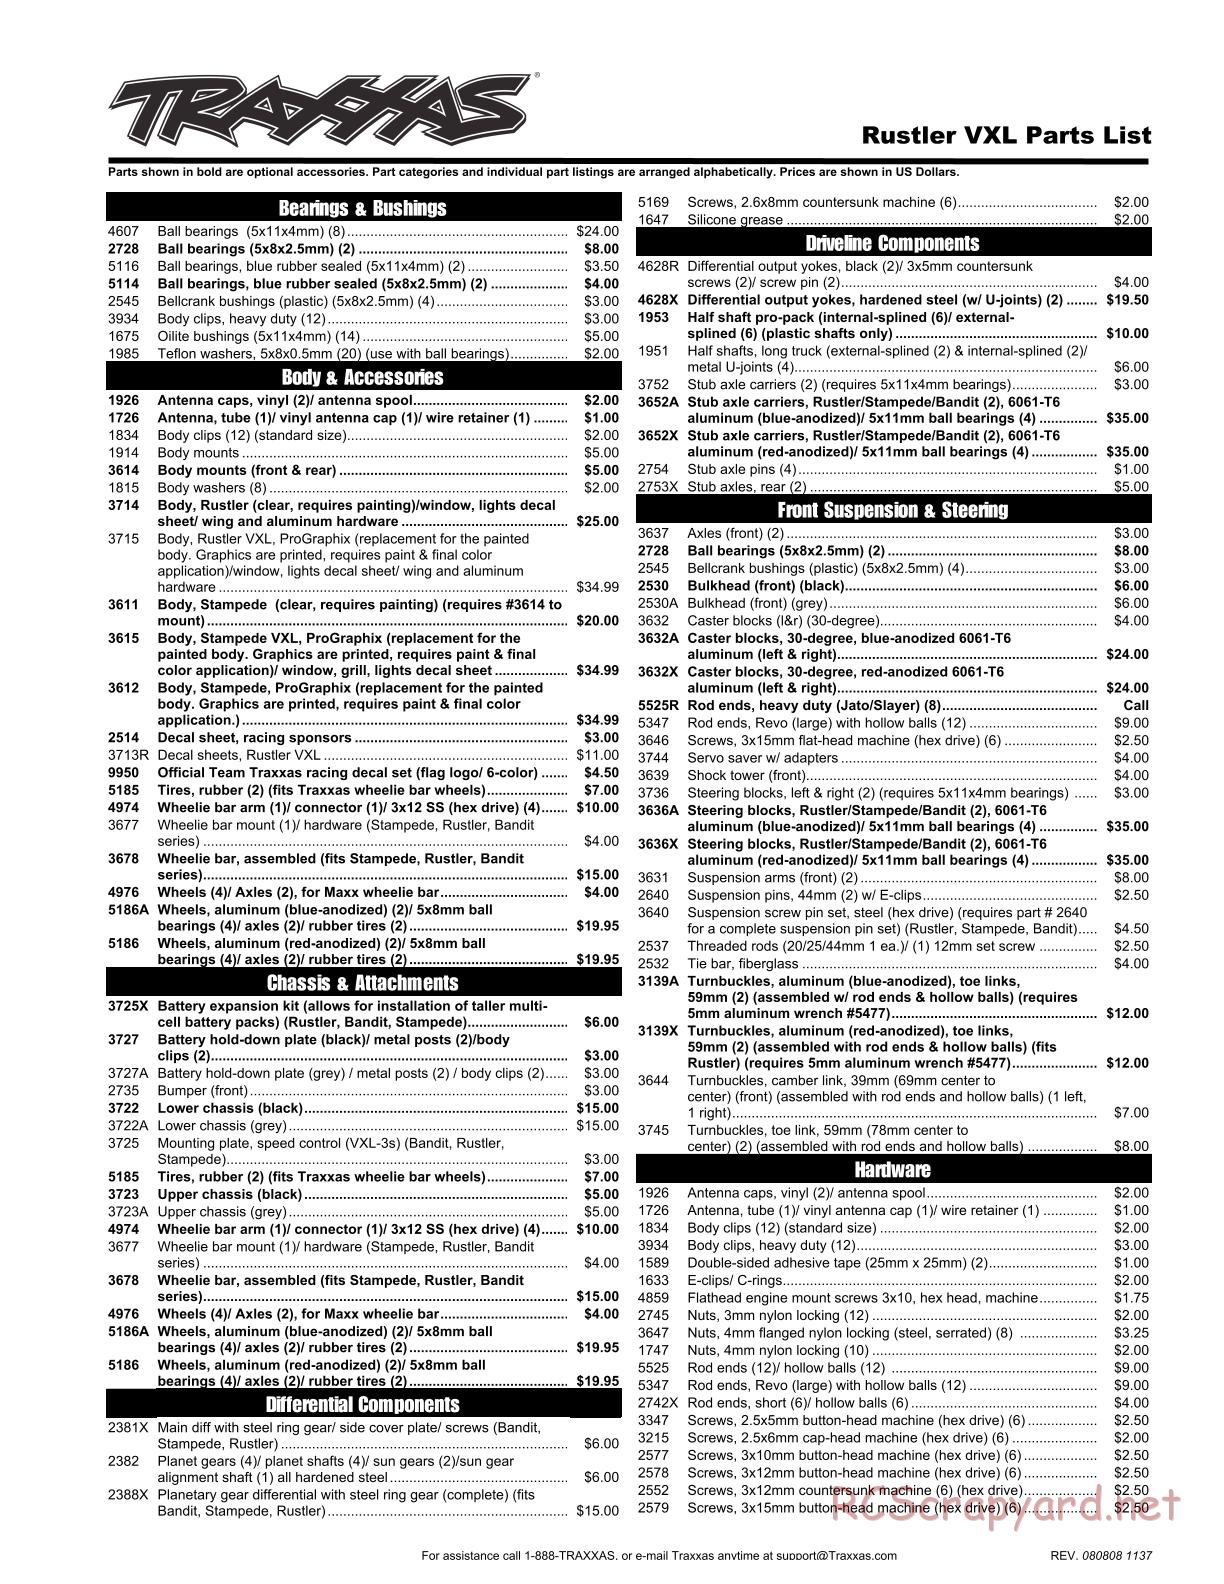 Traxxas - Rustler VXL (2007) - Parts List - Page 1